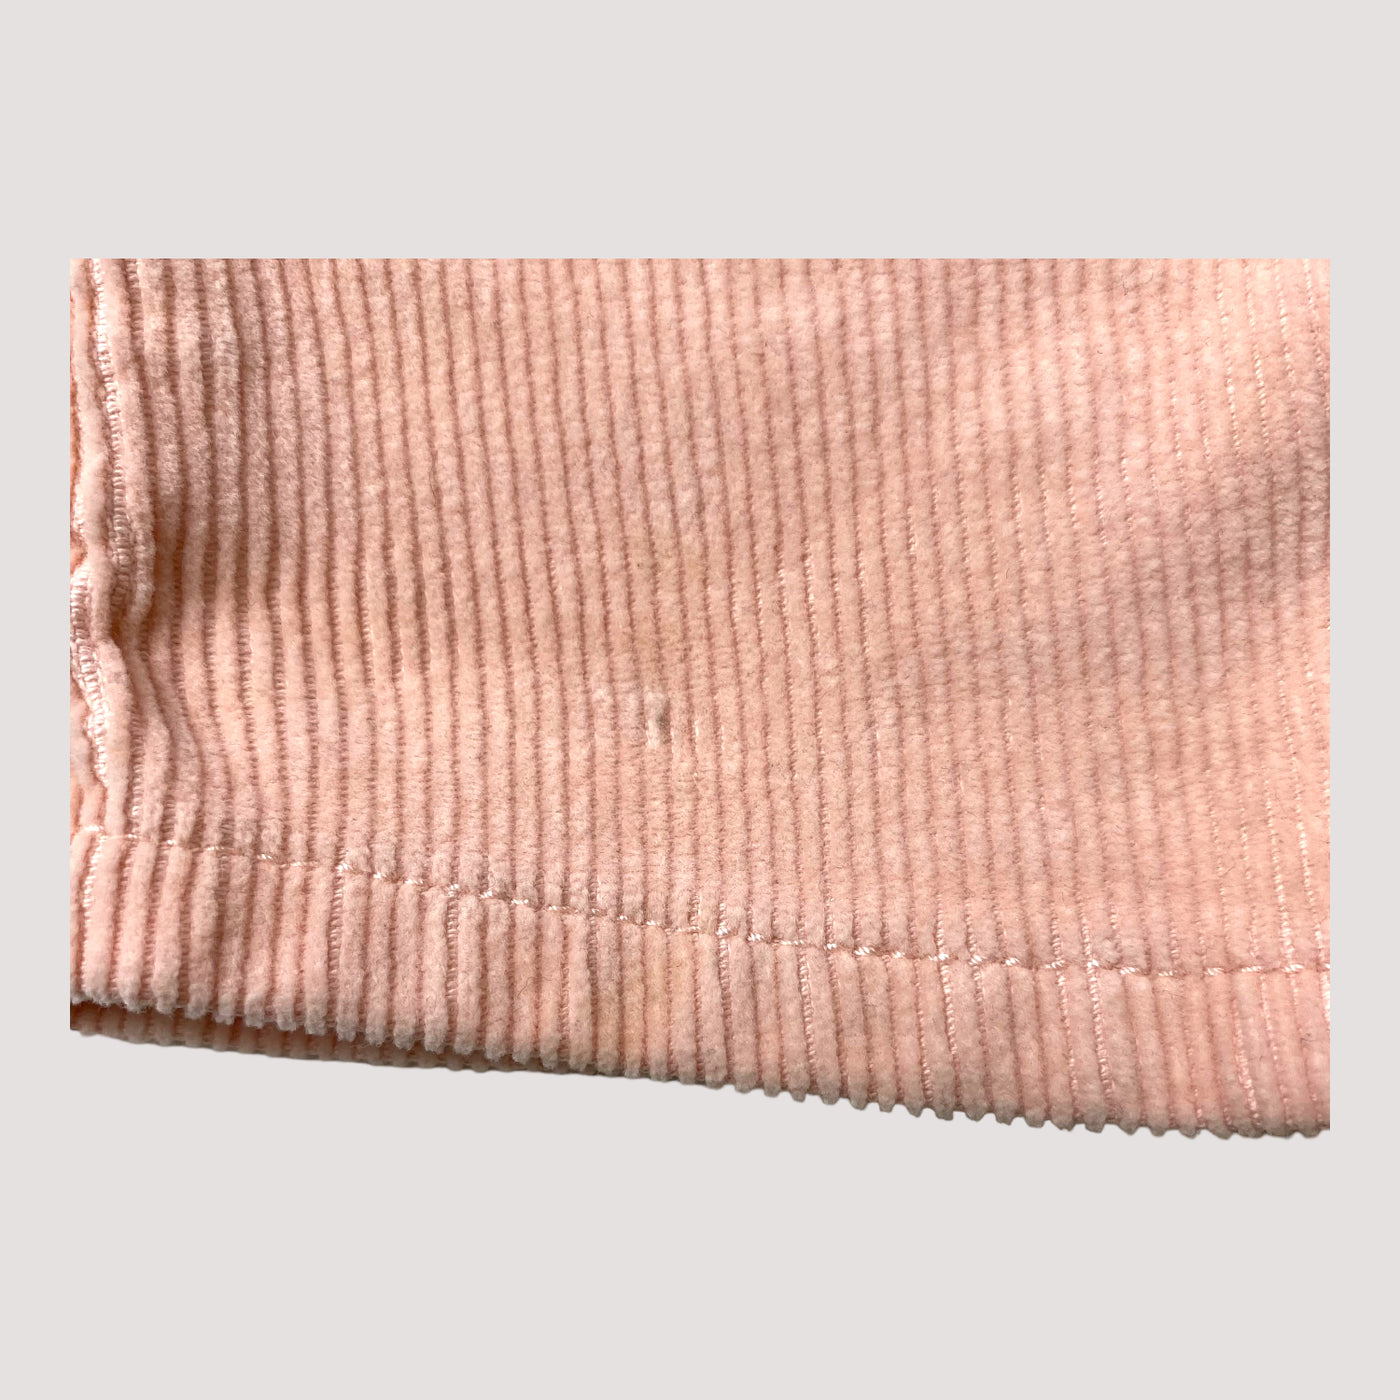 corduroy skirt, pink | 80cm